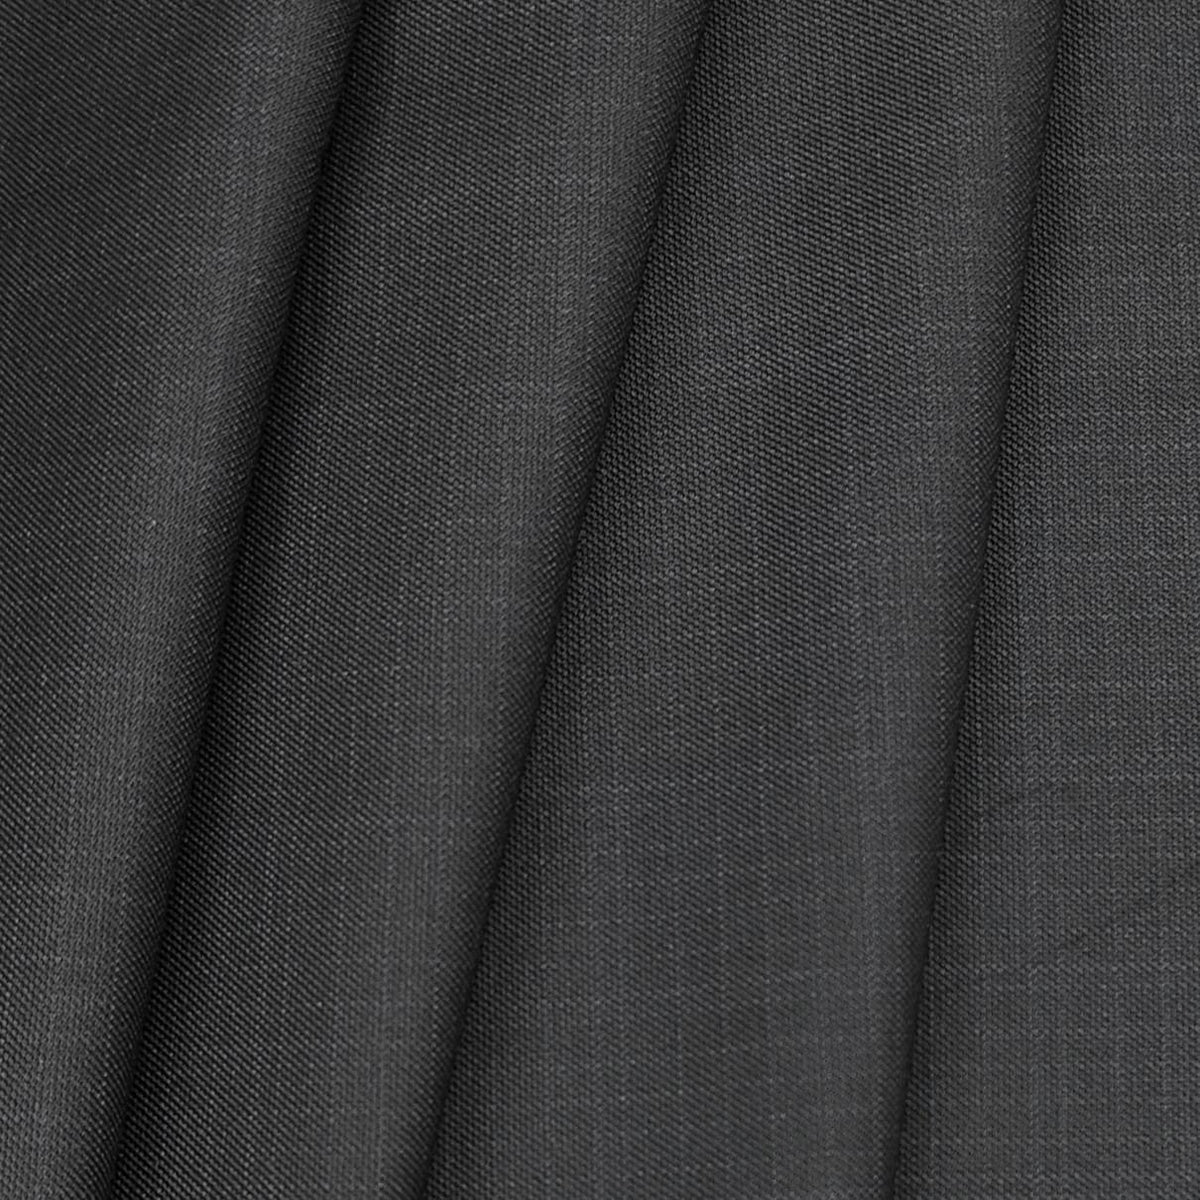 Raymond Men's Polyester Viscose Check Trouser Fabric Colour Black